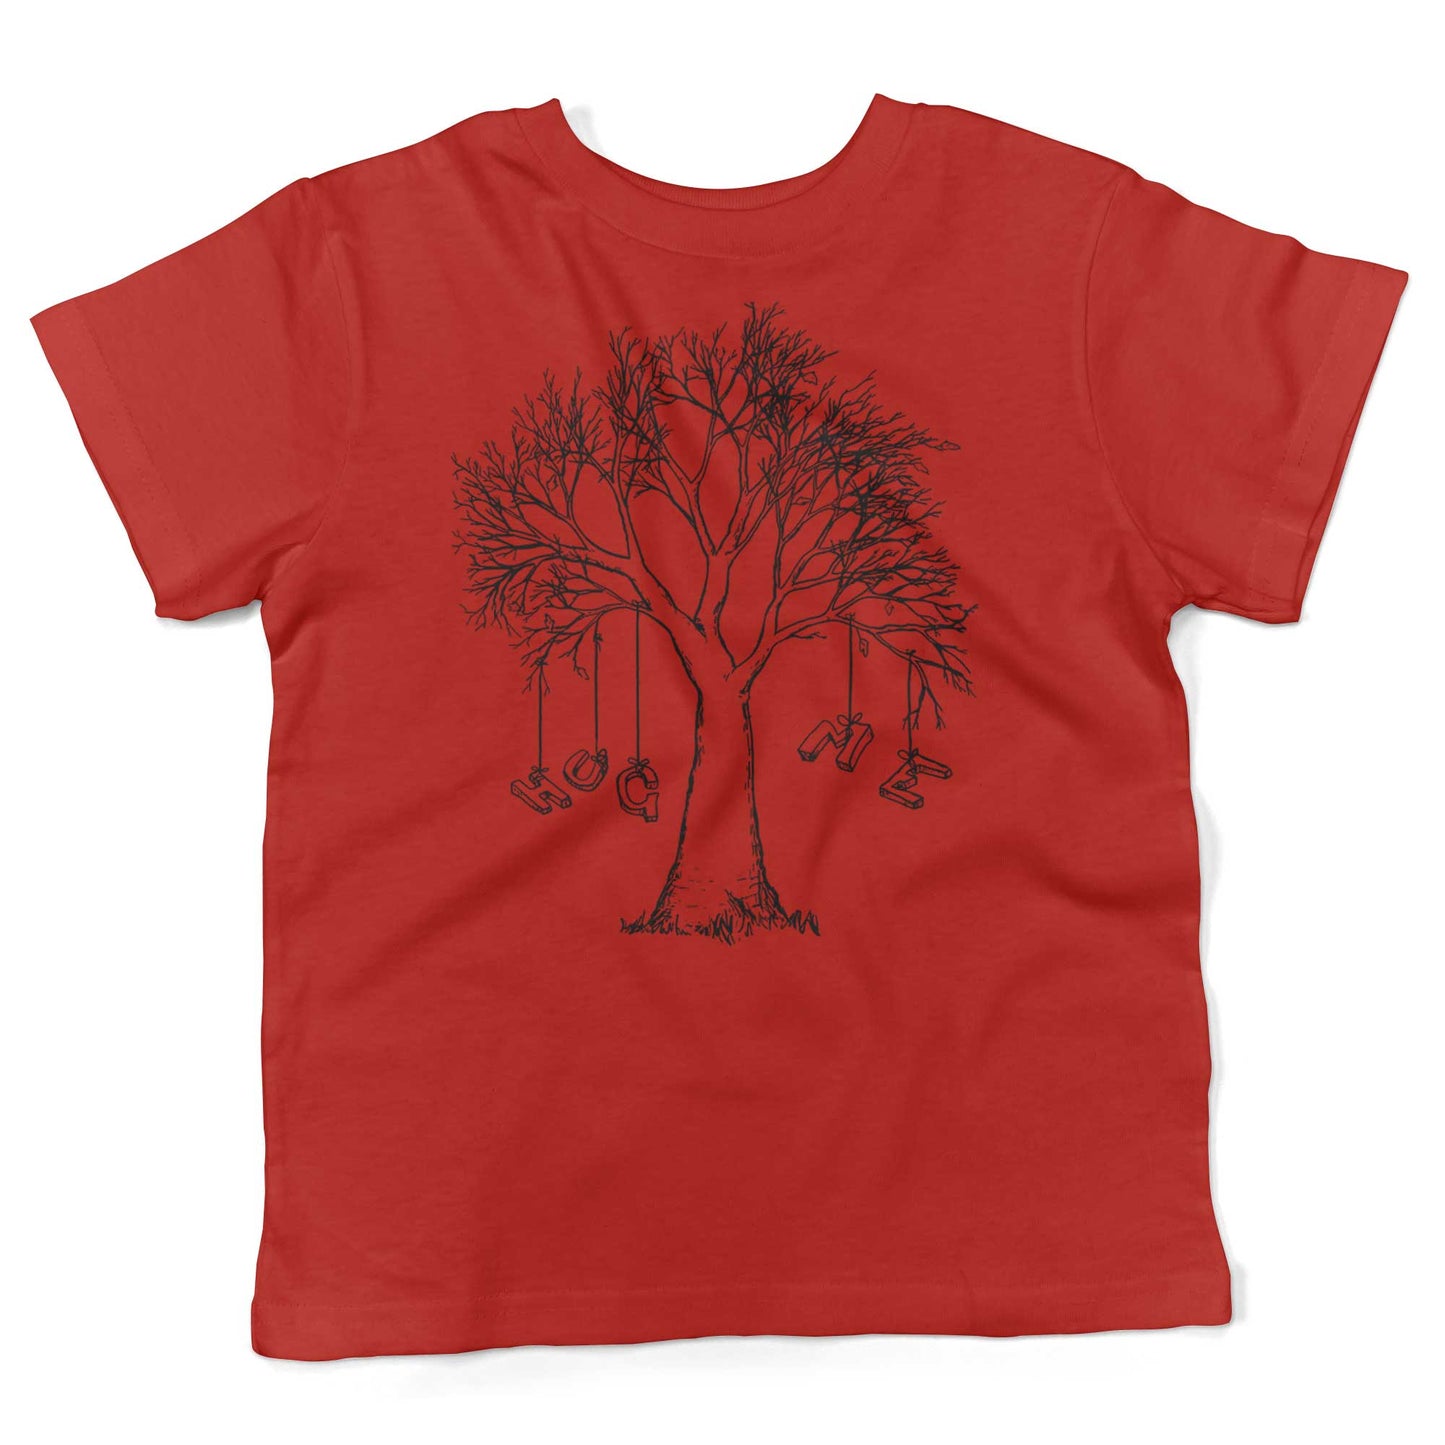 Hug A Tree Toddler Shirt-Red-2T